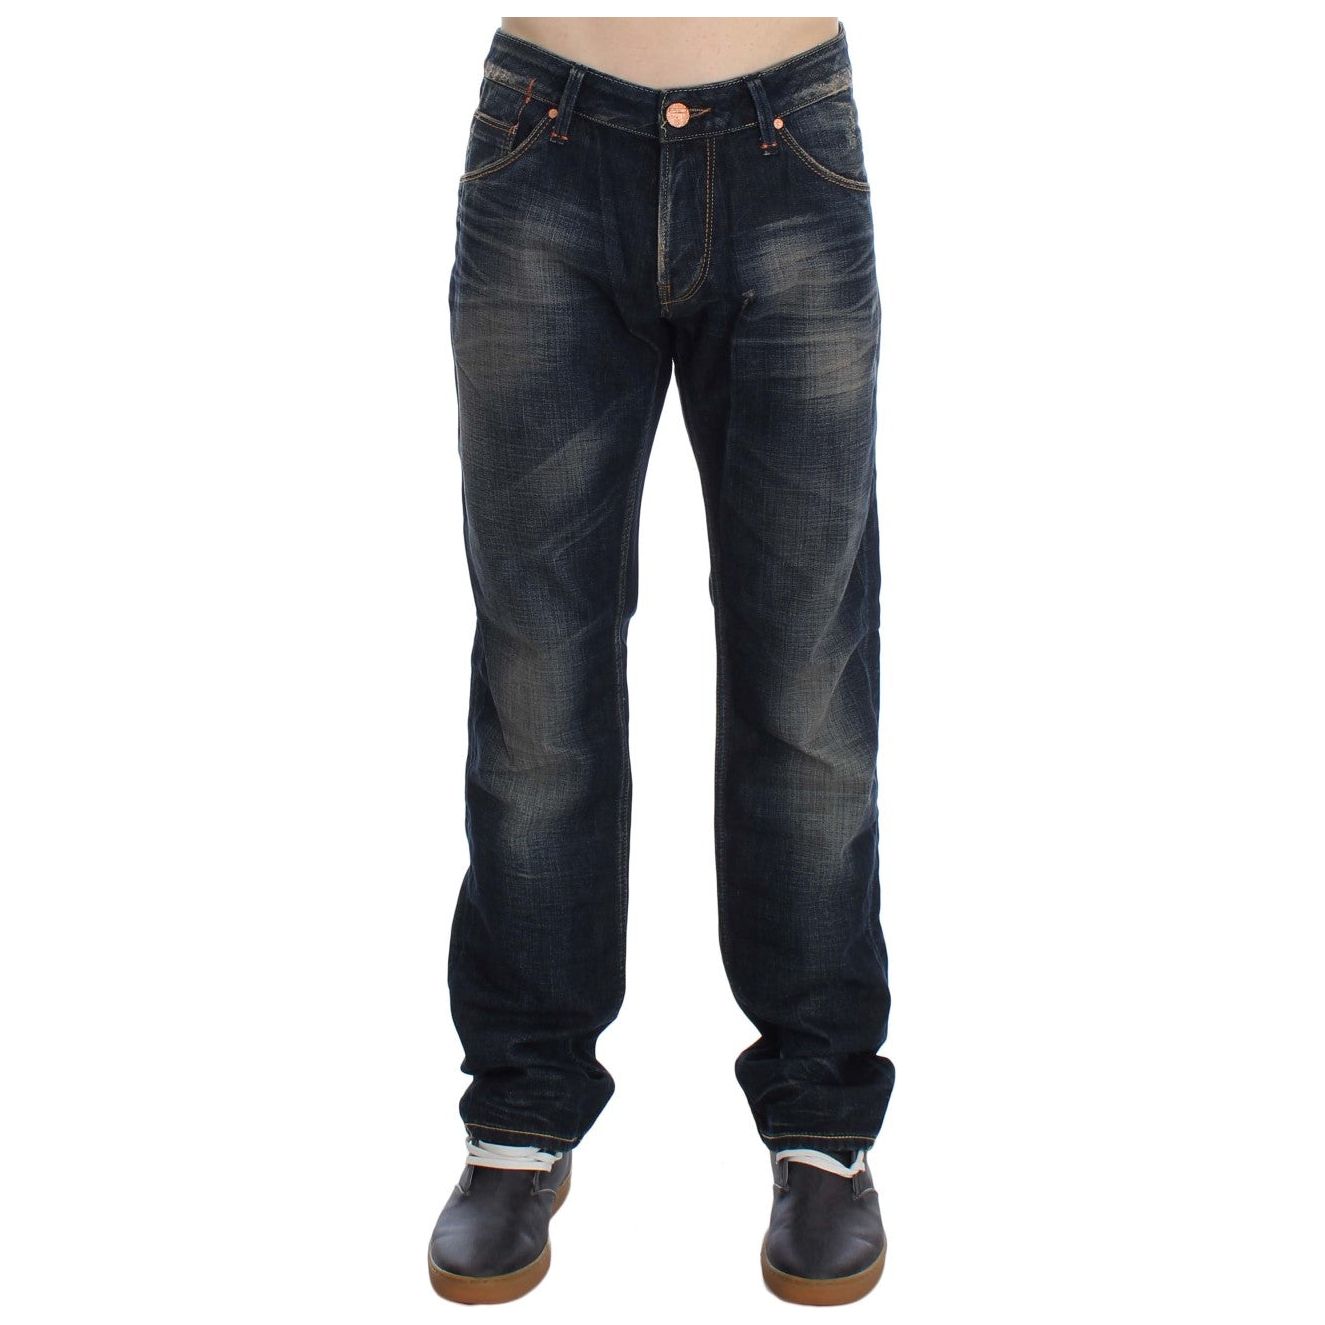 Acht Elegant Straight Fit Low Waist Men's Jeans blue-wash-straight-fit-low-waist-jeans 299234-blue-wash-straight-fit-low-waist-jeans-1.jpg